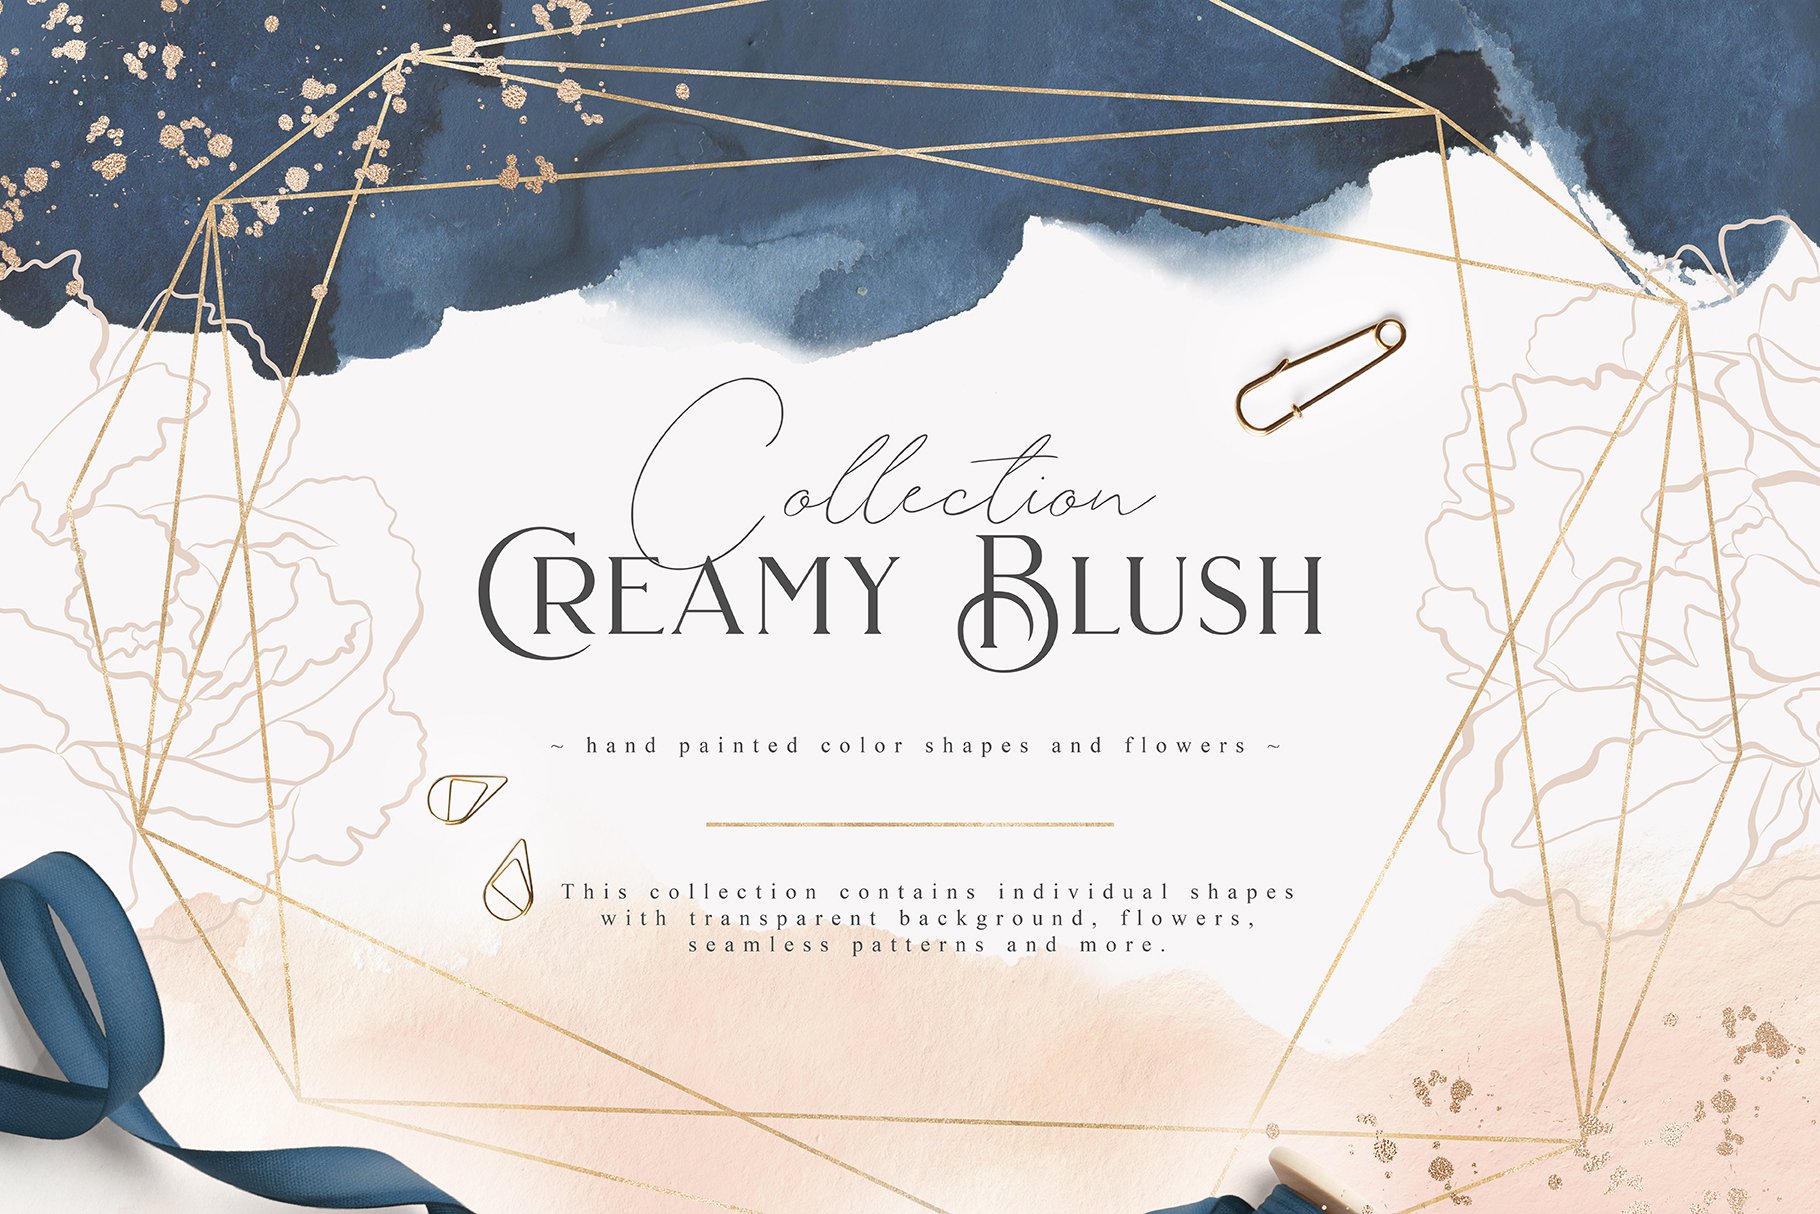 creamy_blush-first-image-